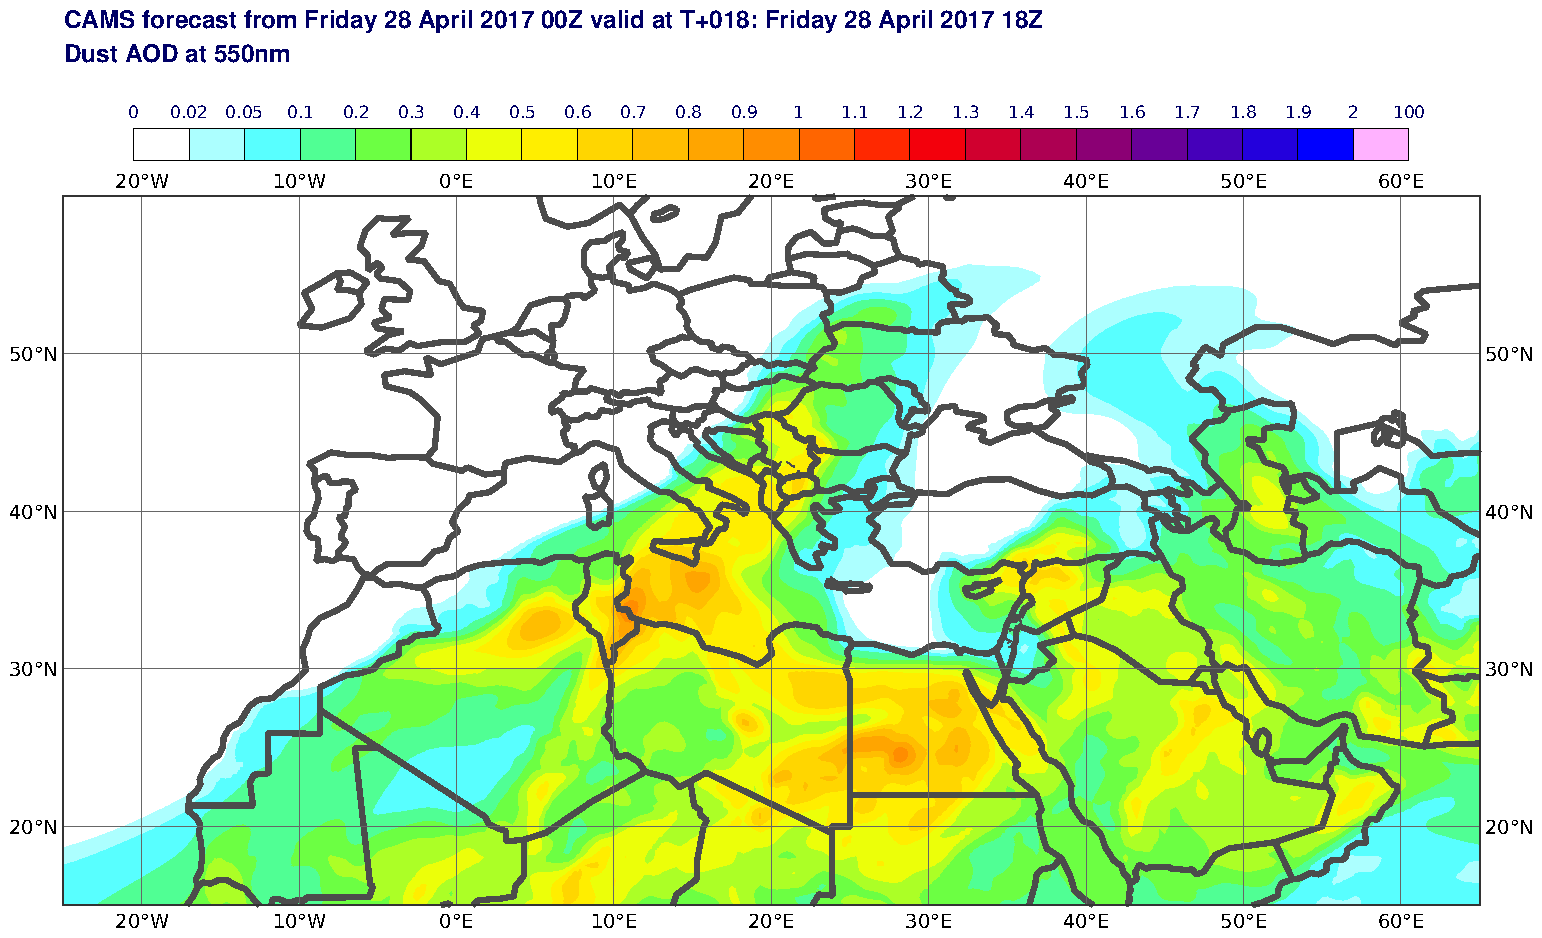 Dust AOD at 550nm valid at T18 - 2017-04-28 18:00